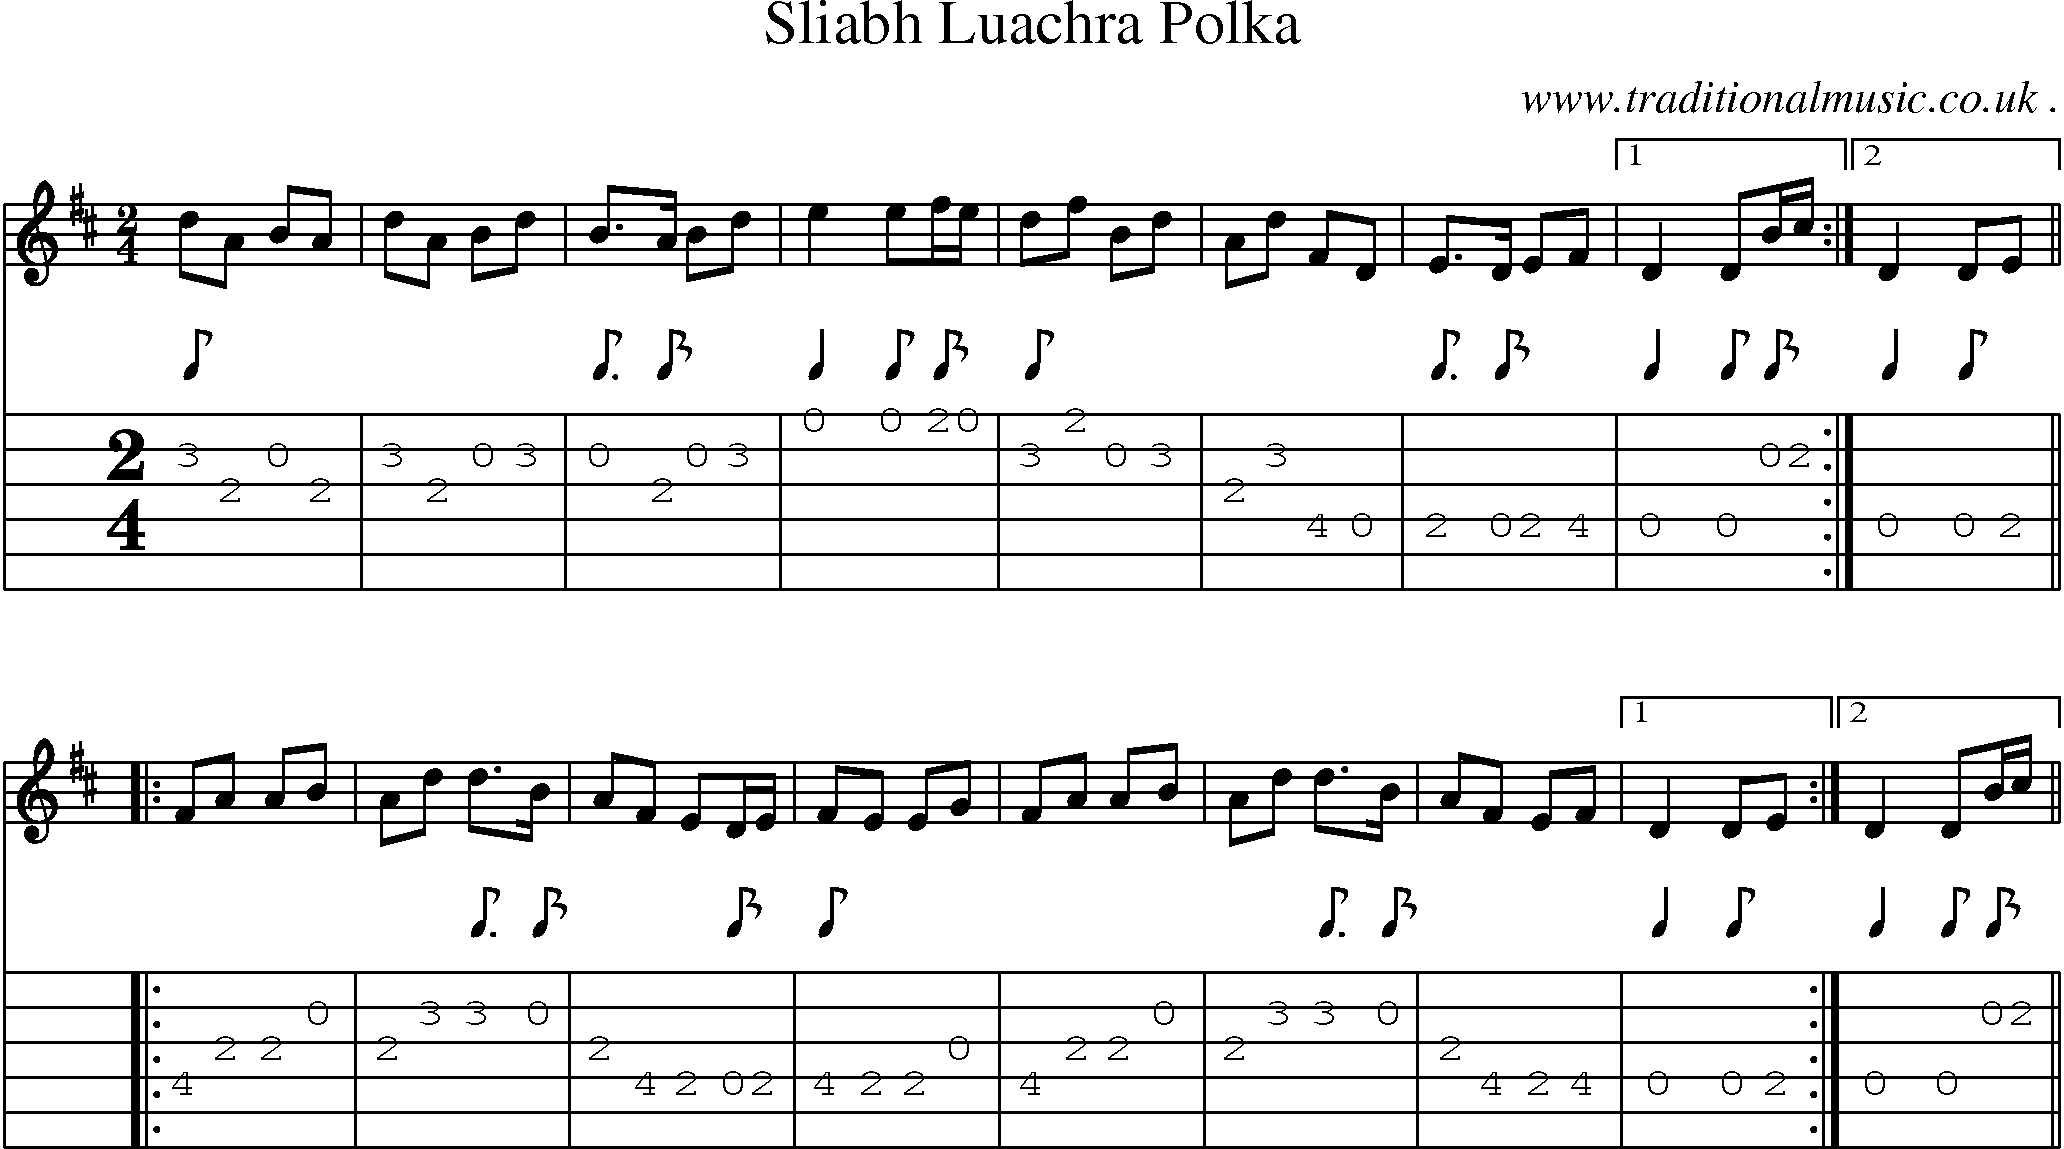 Sheet-Music and Guitar Tabs for Sliabh Luachra Polka